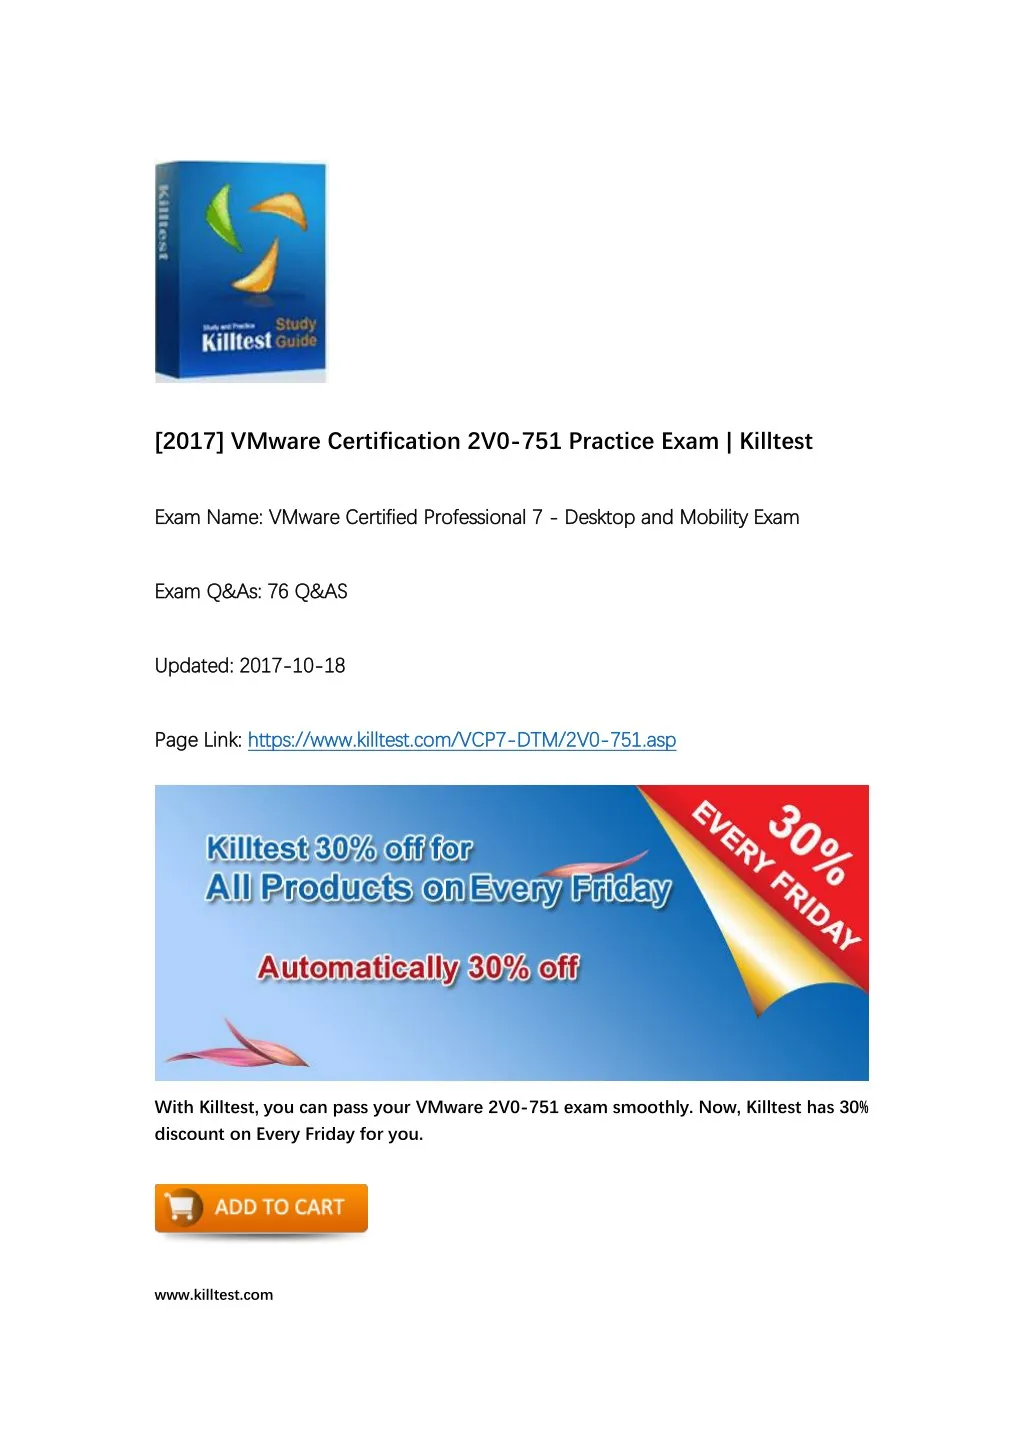 2017 vmware certification 2v0 751 practice exam